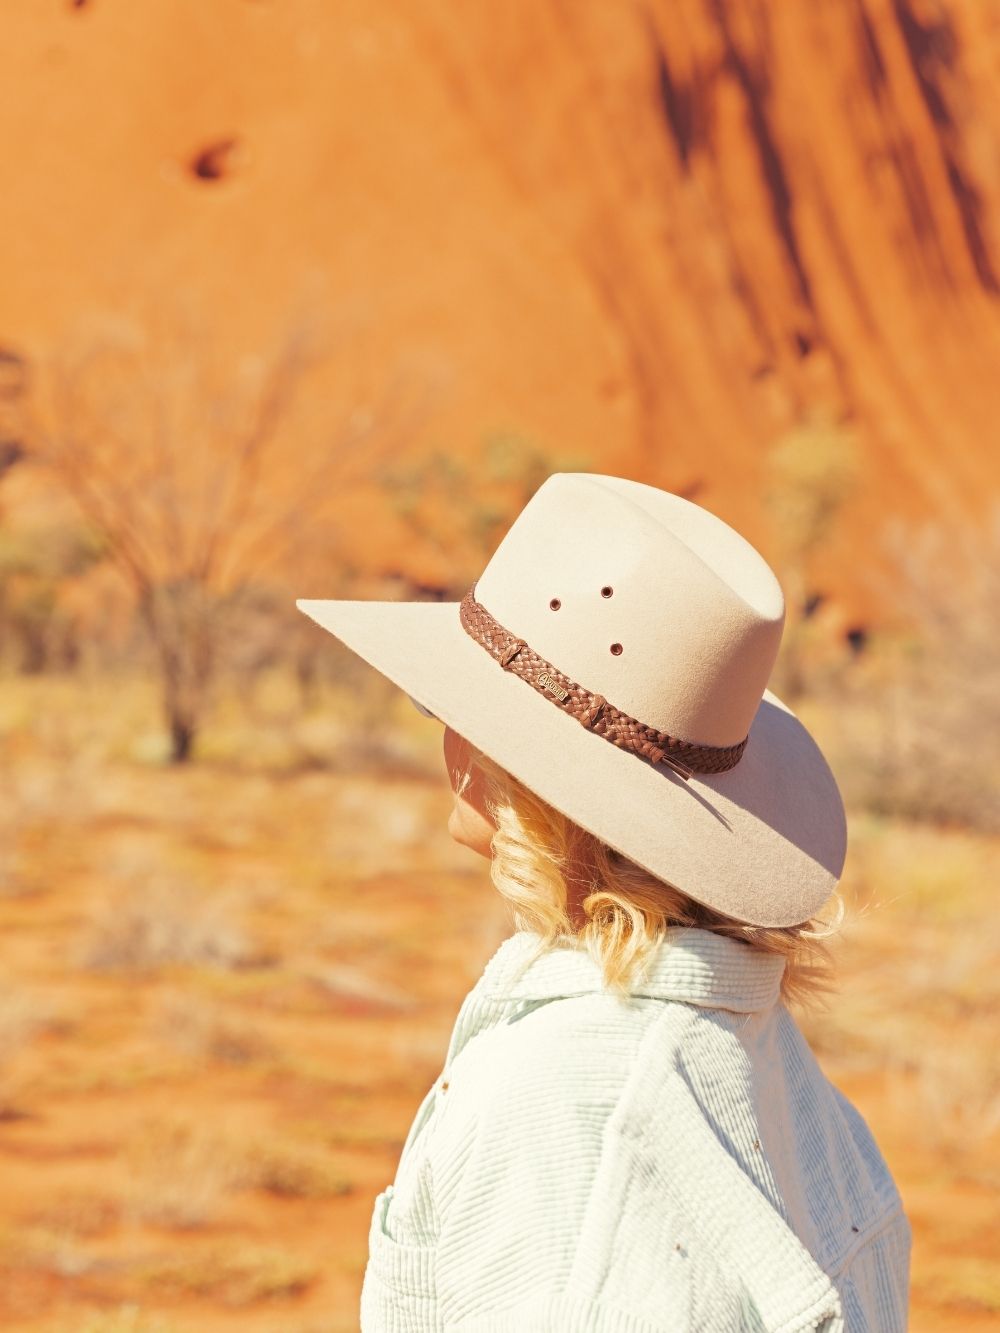 Akubra Hats Australian Made Worn the World over